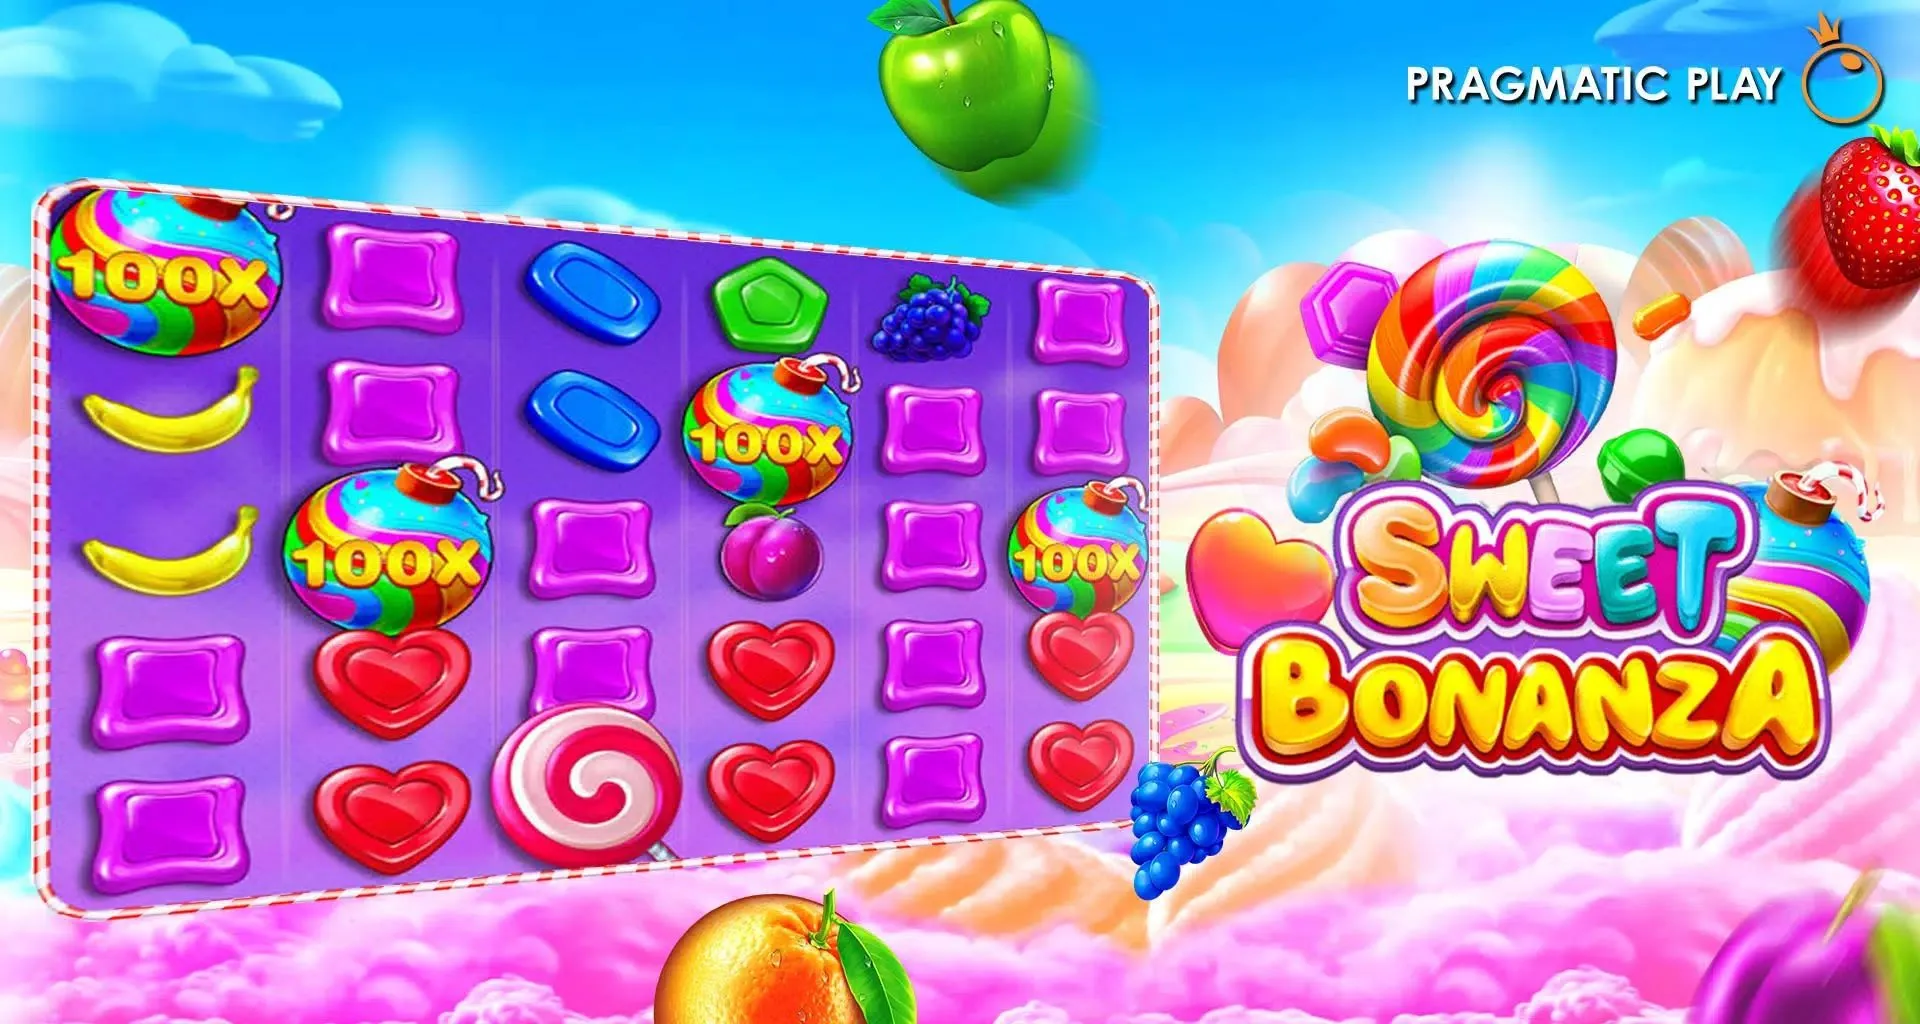 Sweet Bonanza's gameplay